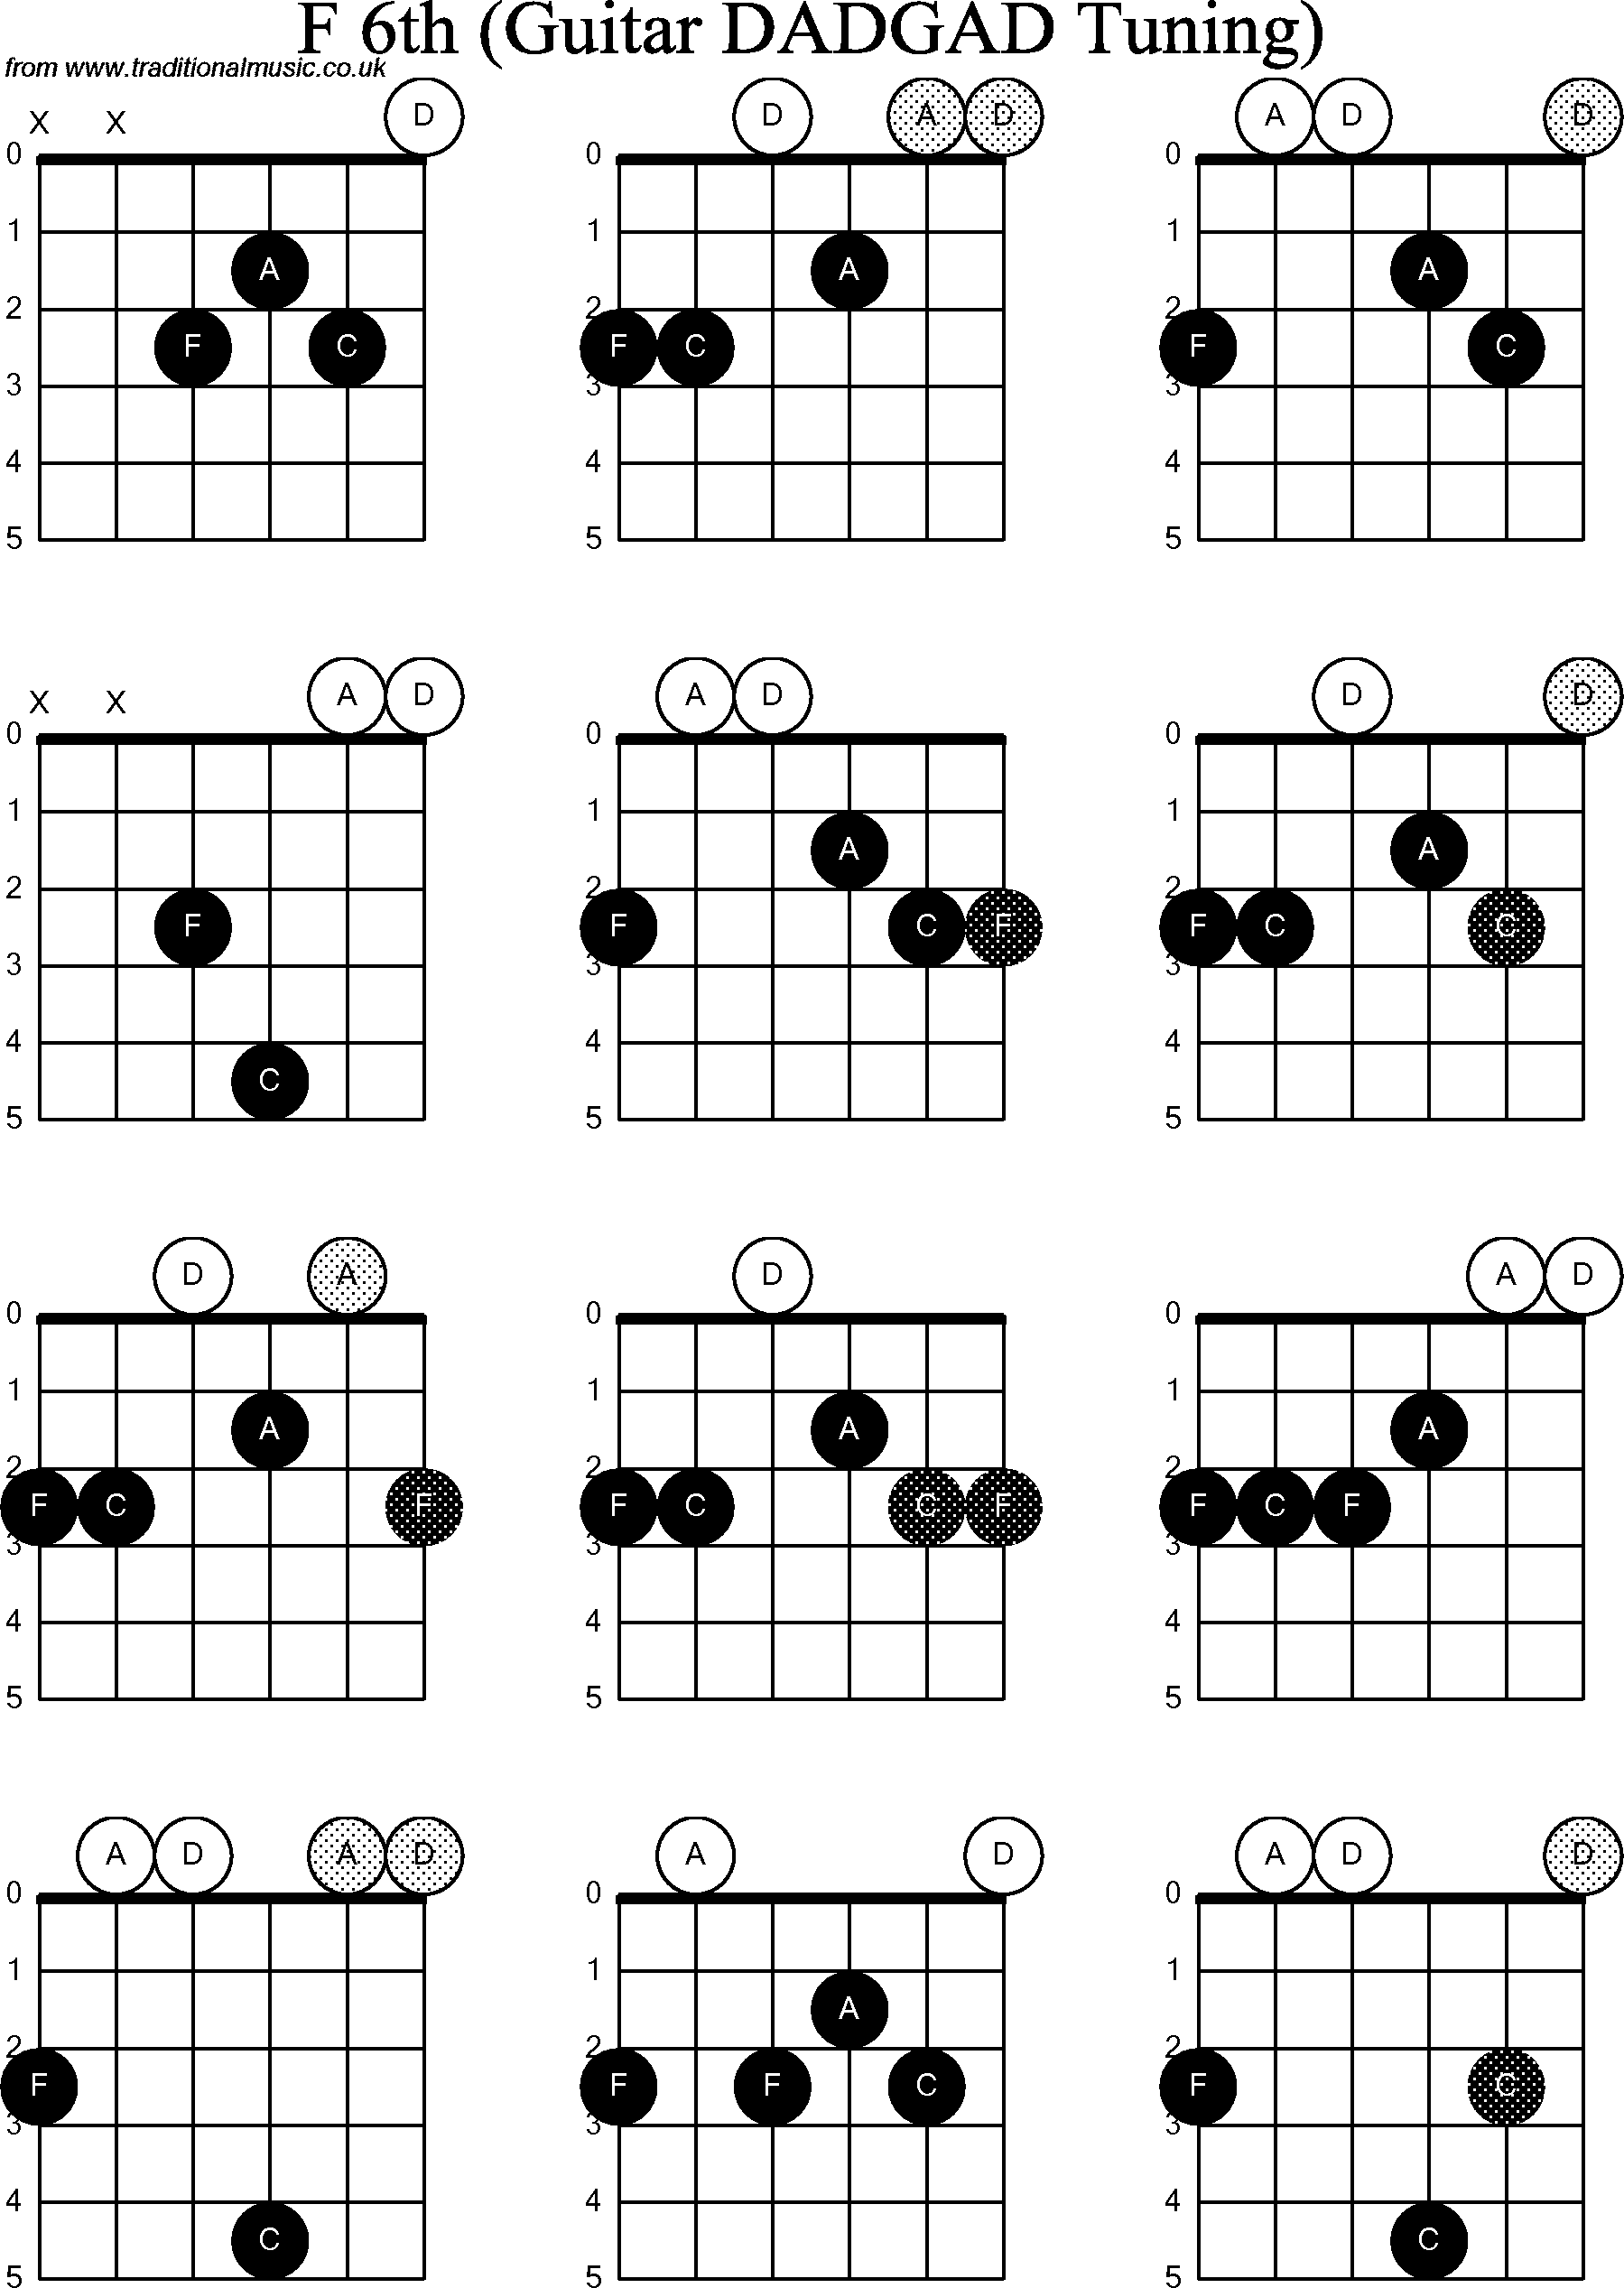 Chord Diagrams for D Modal Guitar(DADGAD), F6th